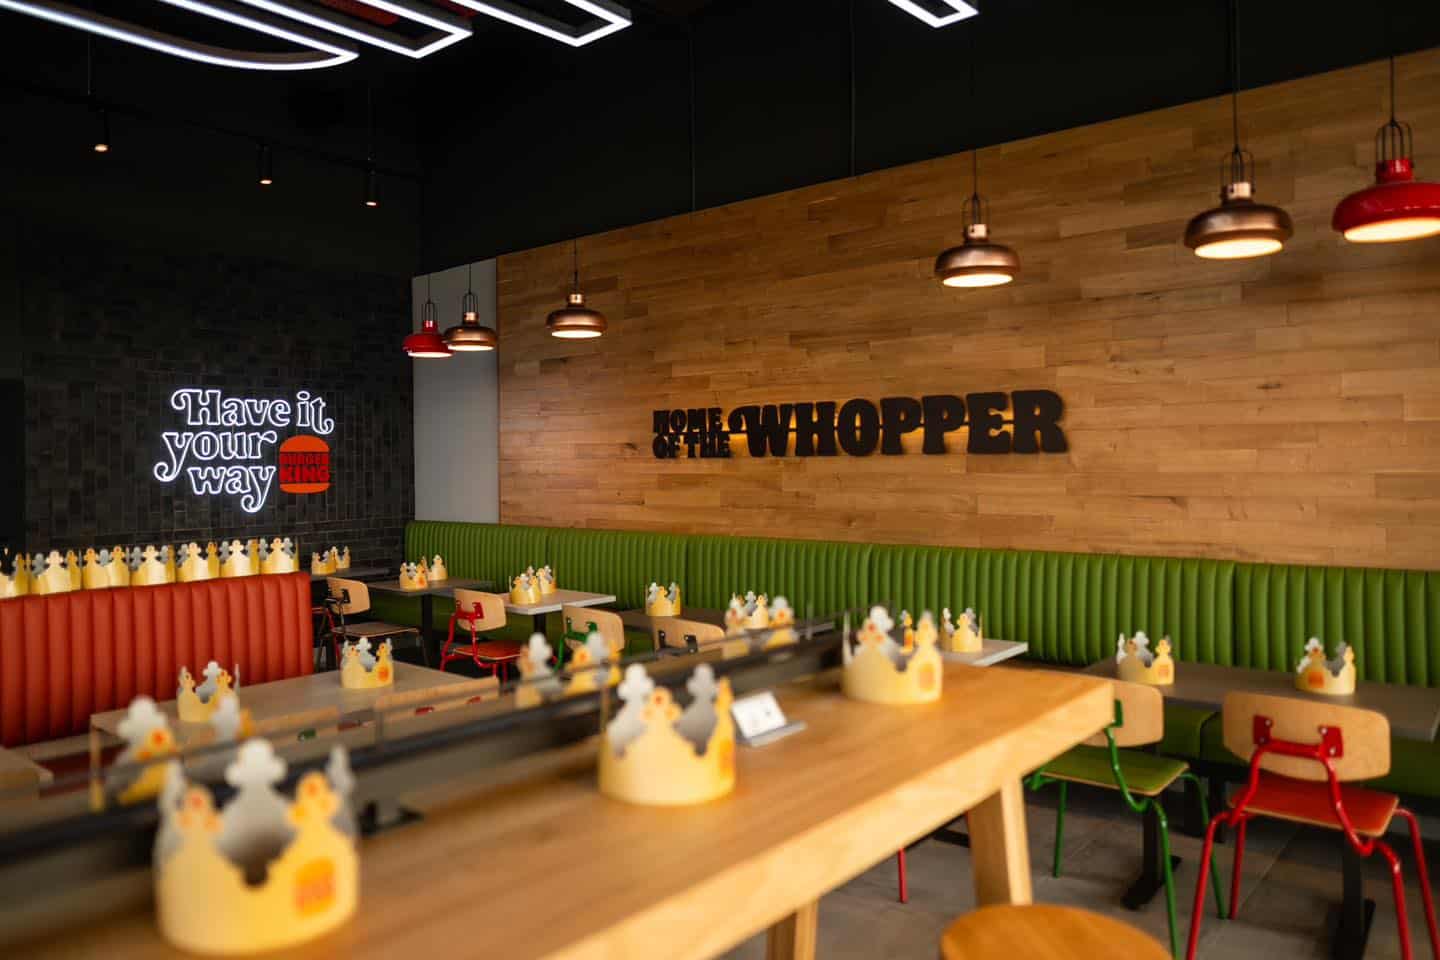 s-a deschis al doilea restaurant burger king din sibiu (foto)